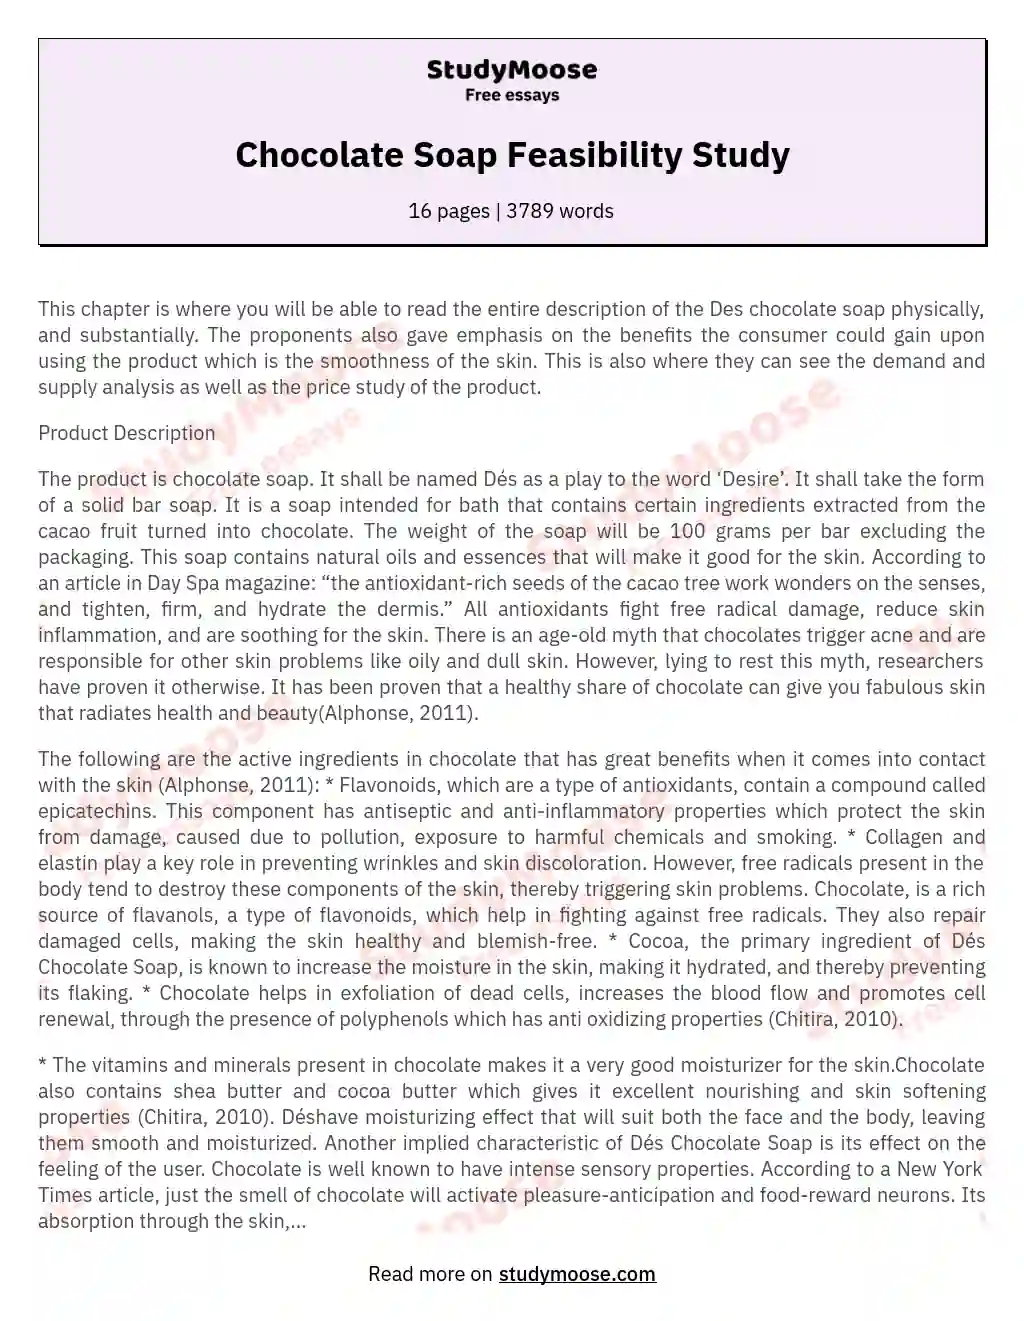 Chocolate Soap Feasibility Study essay